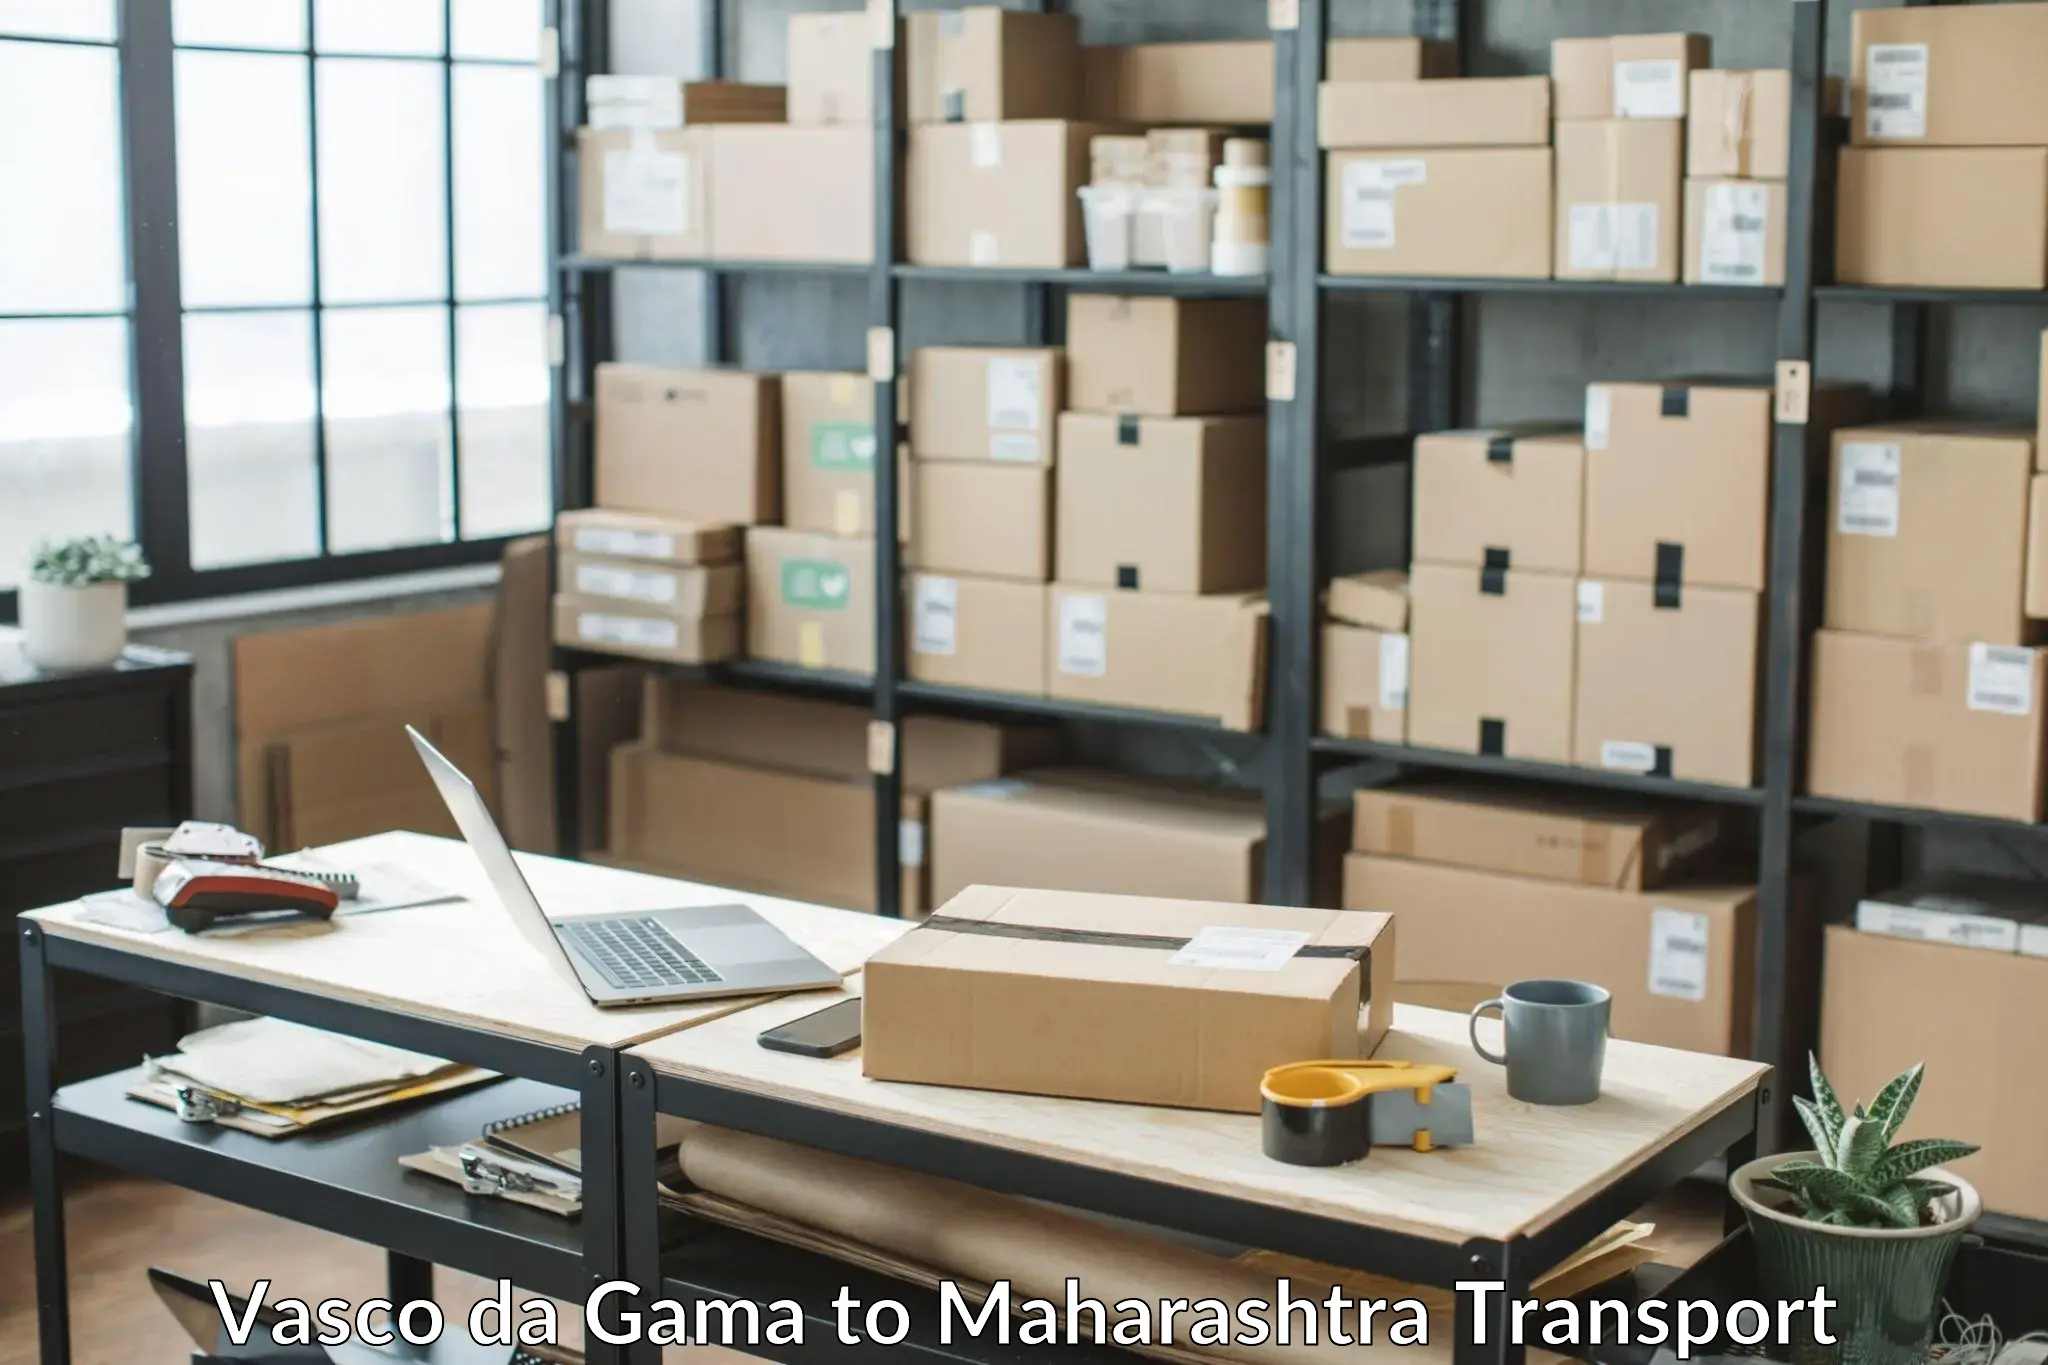 Sending bike to another city Vasco da Gama to Maharashtra